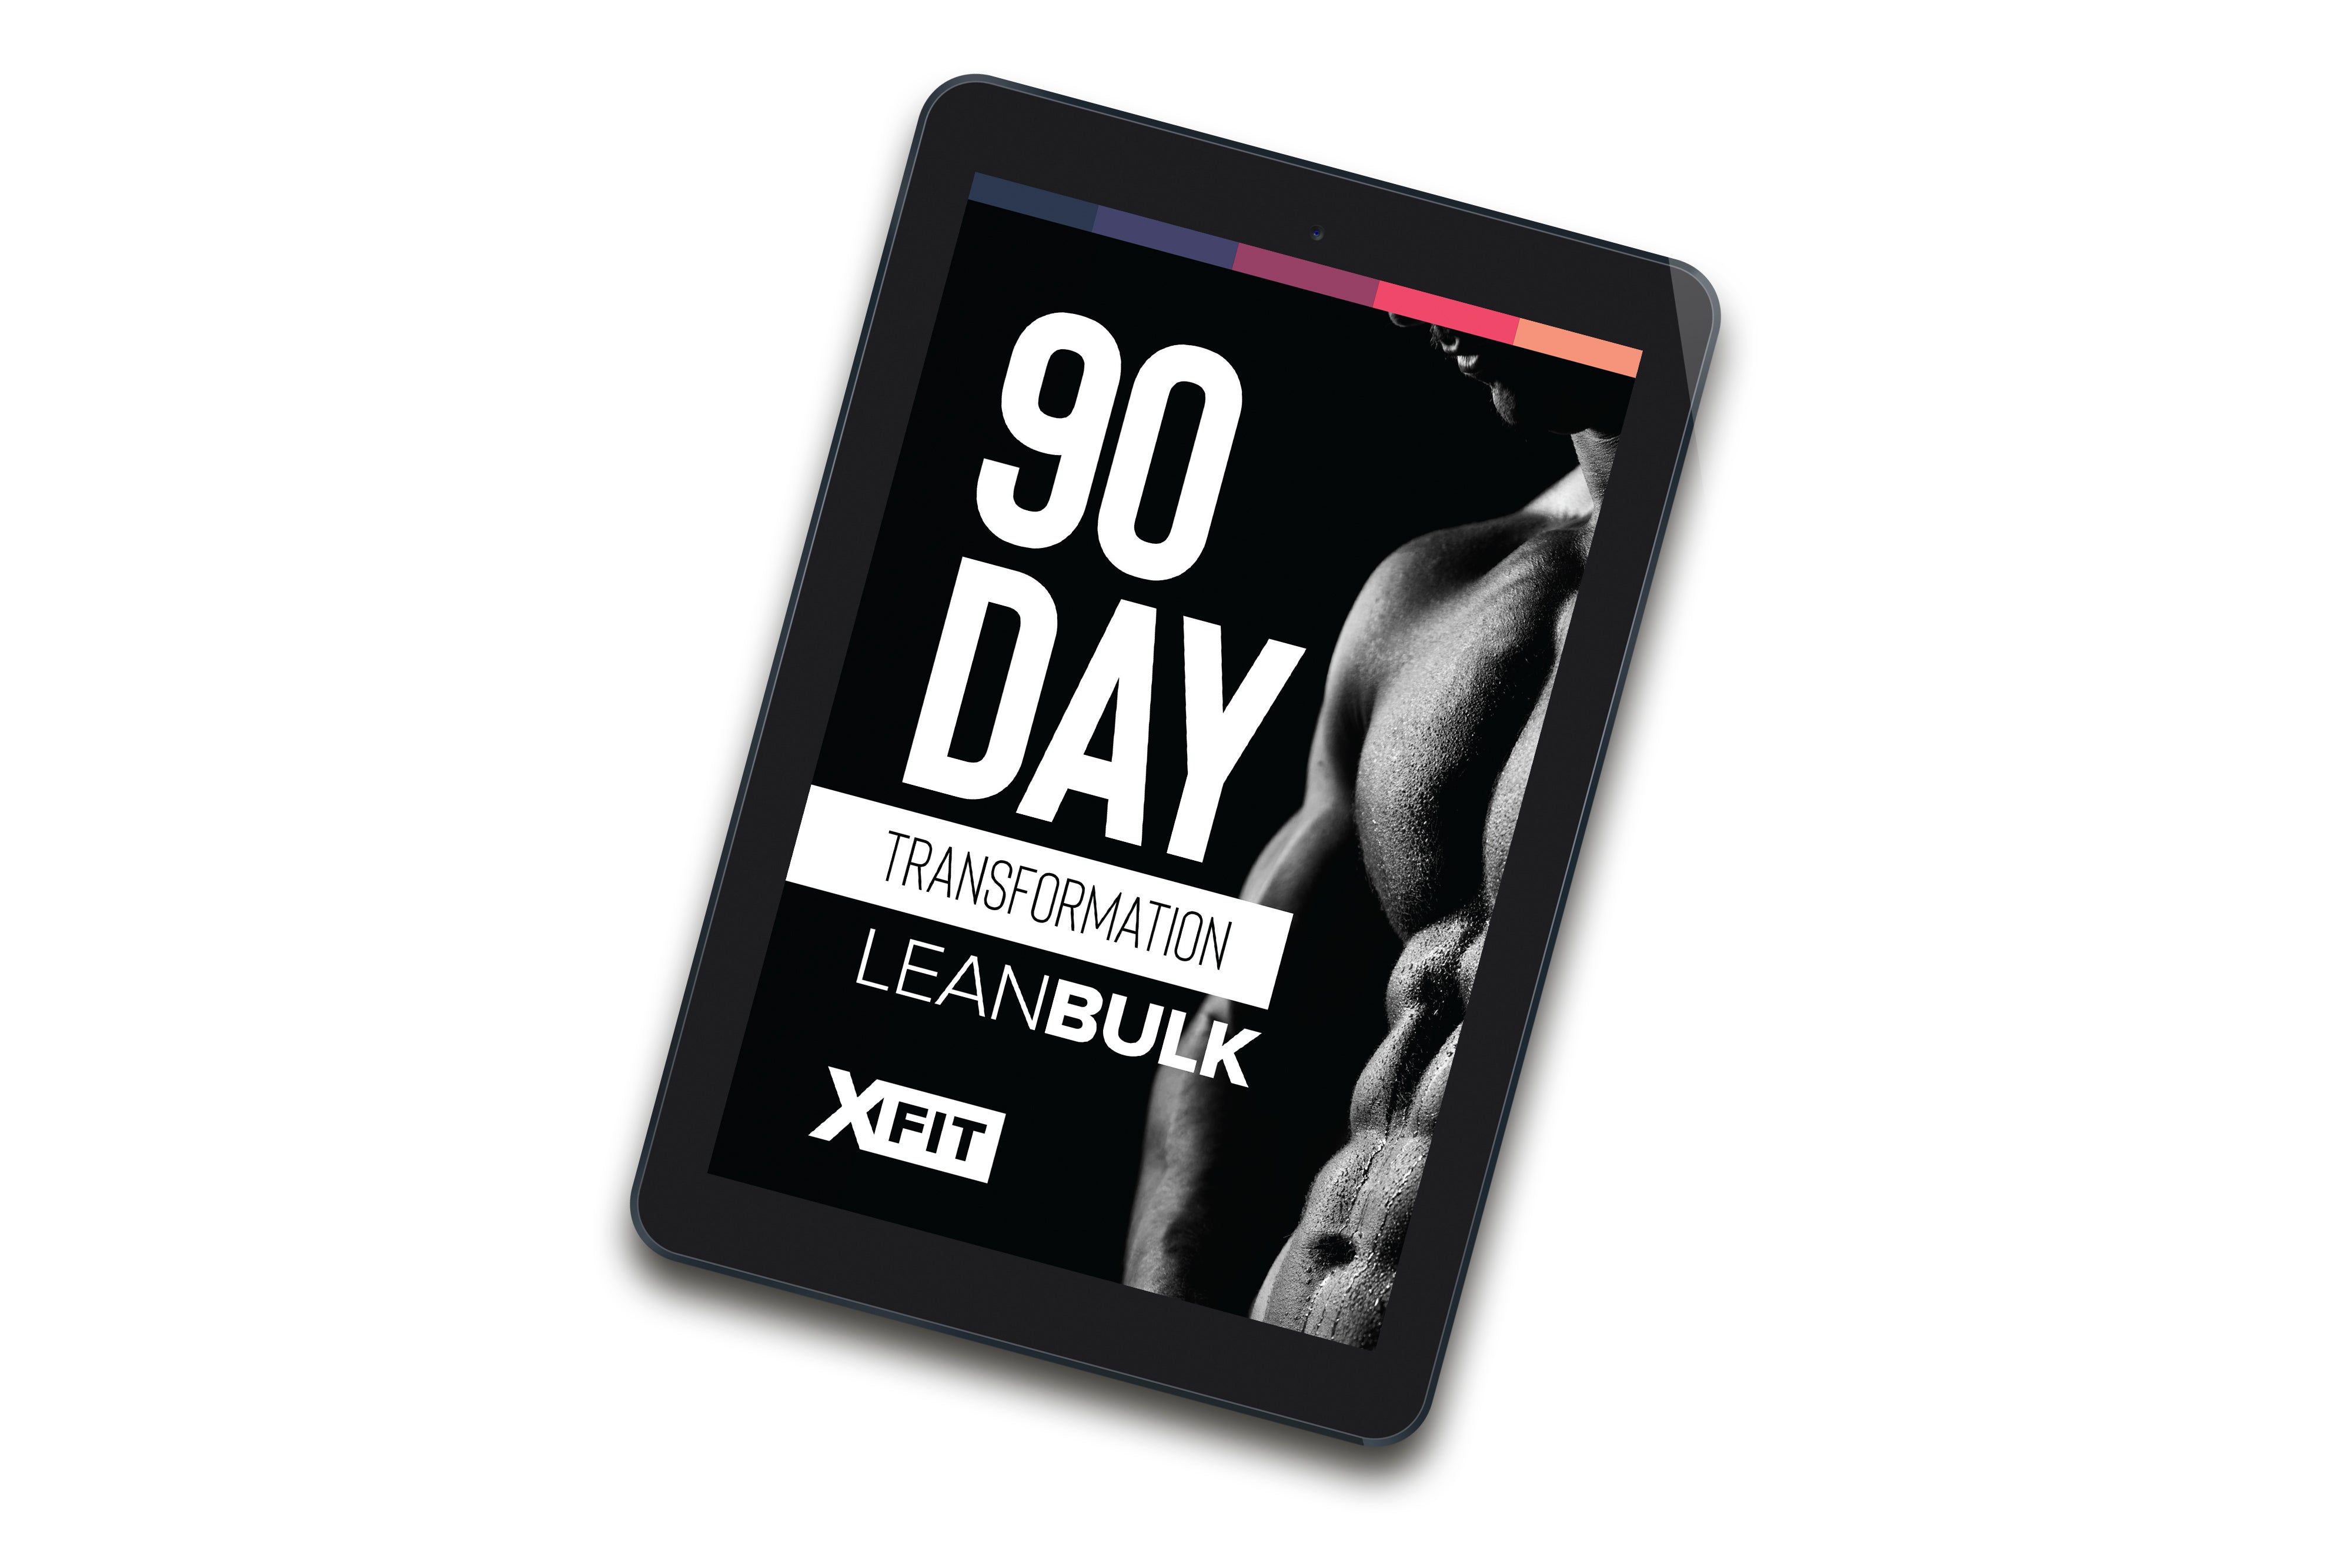 90 Day Transformation - Lean Bulk